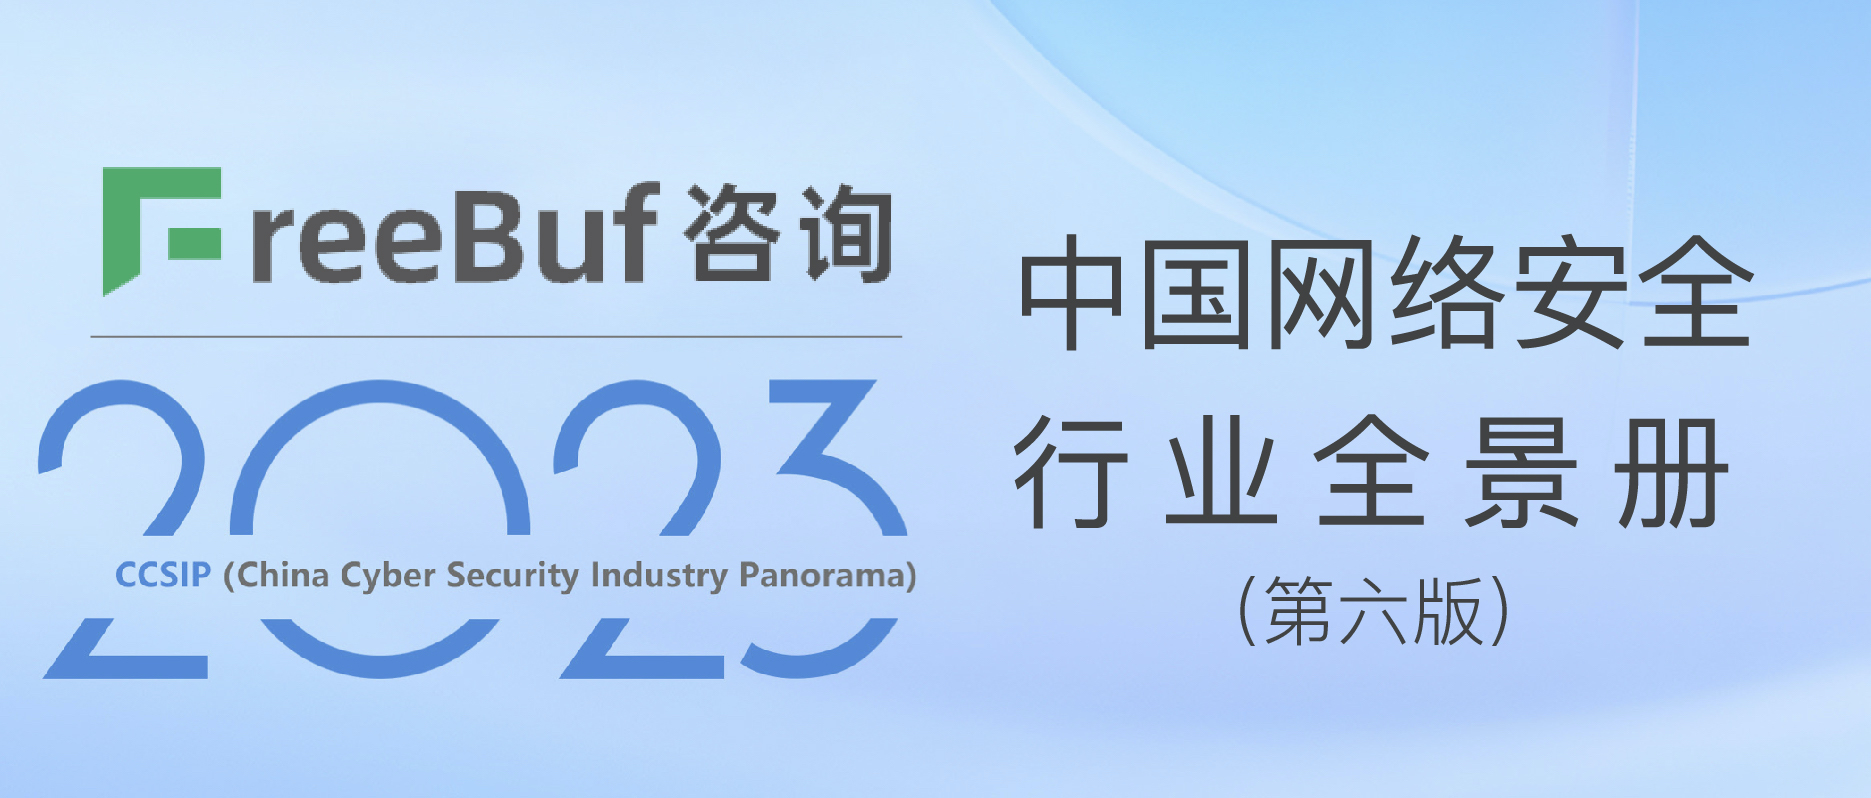 CCSIP 2023中(zhōng)國網絡安全行業全景冊（第六版）正式發布，上訊信息入選50項細分(fēn)領域